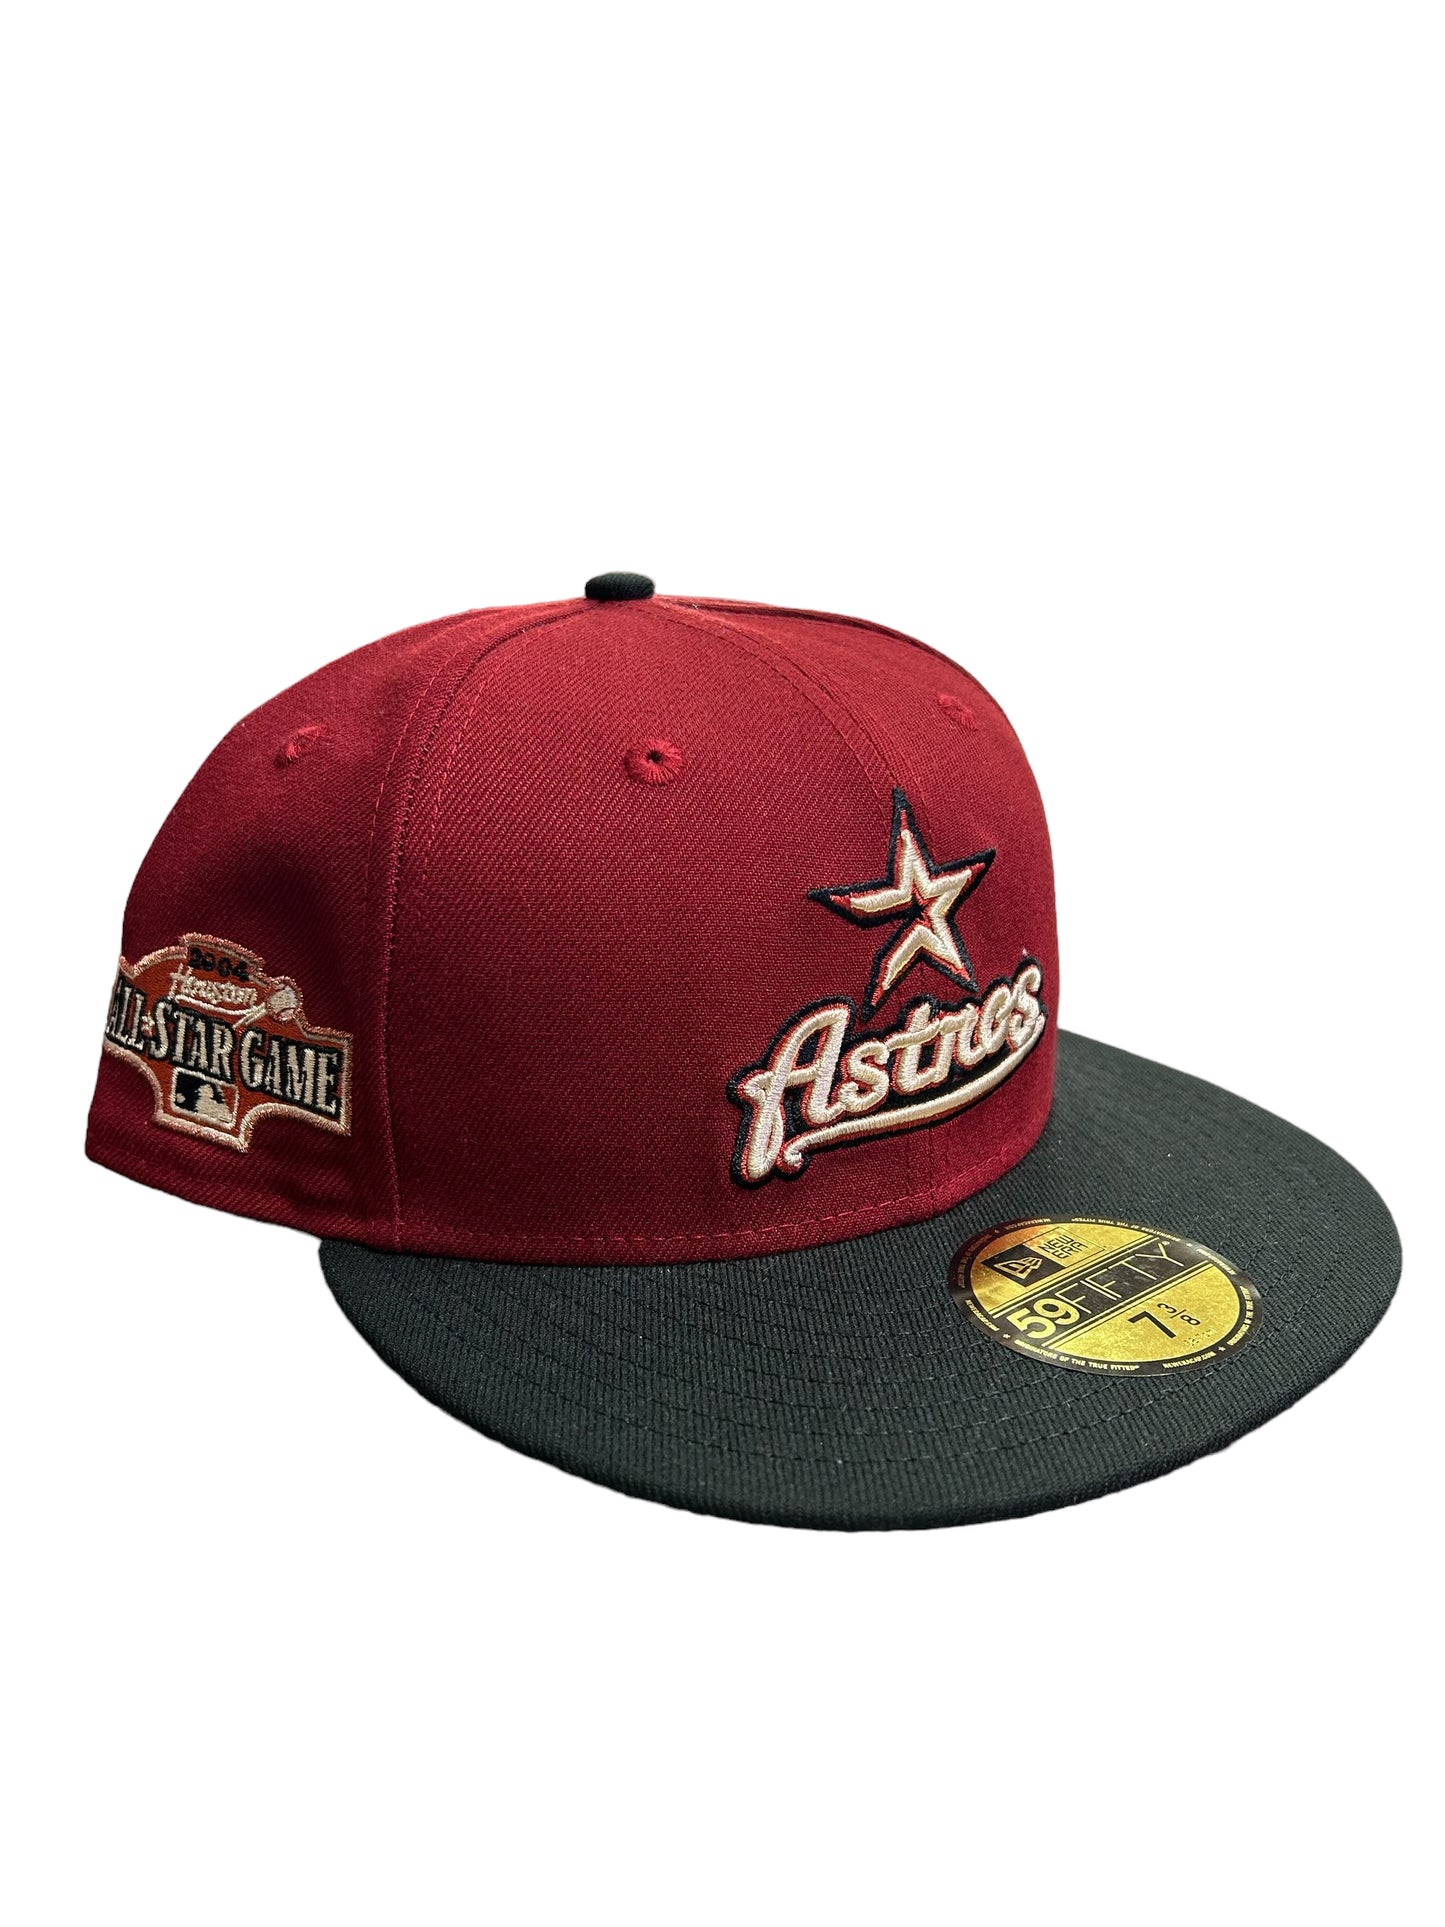 Houston Astros Open Star Maroon/Grey Hat